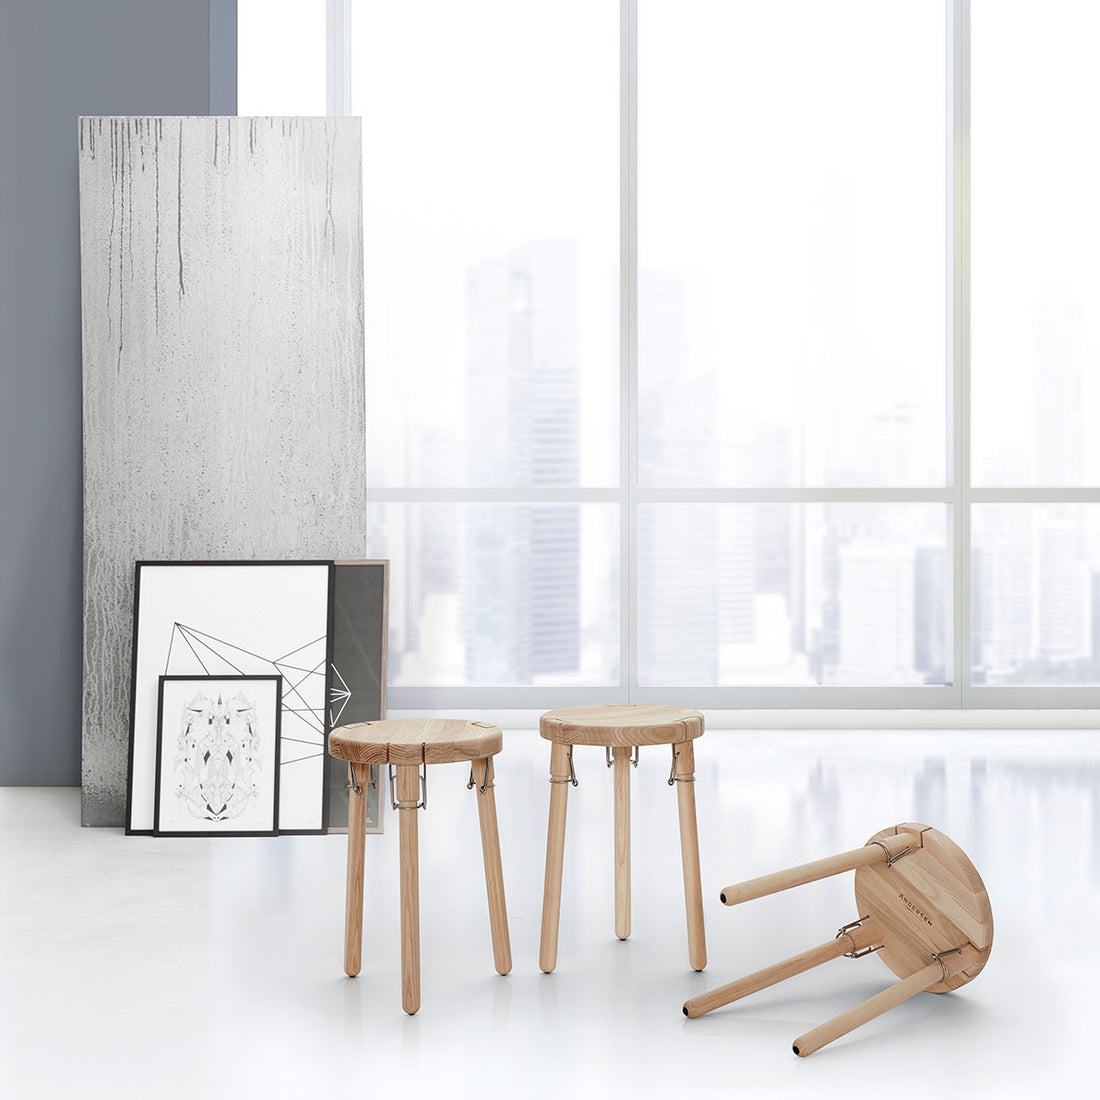 Andersen Furniture U1 stool Ø30x46,5 cm - ash - DesignGaragen.dk.